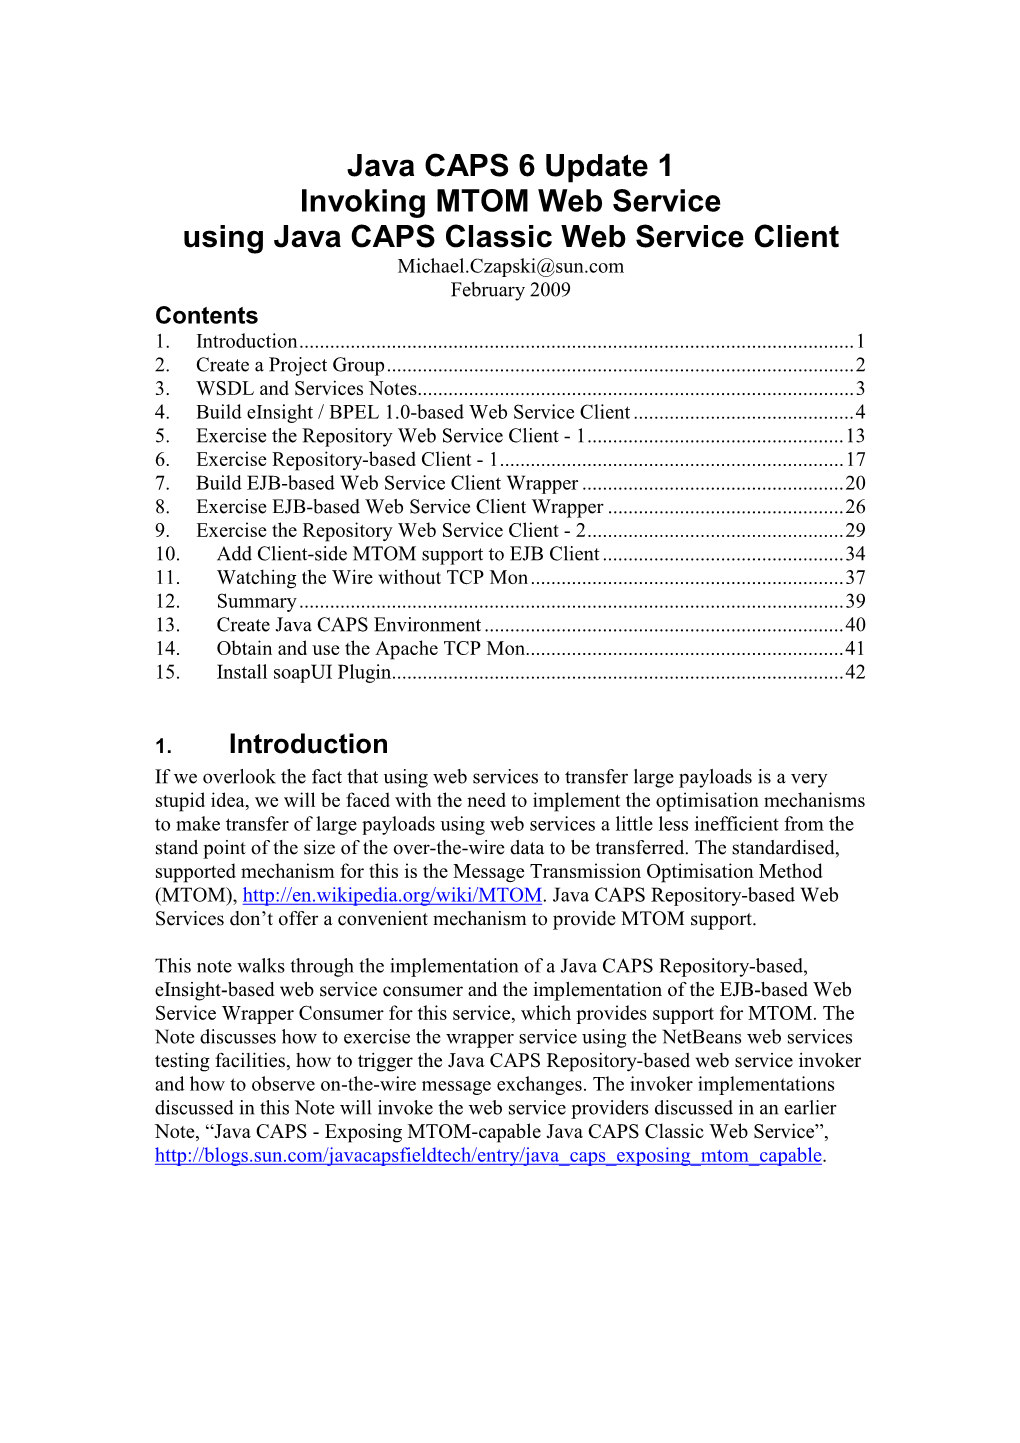 Create Java CAPS Environment